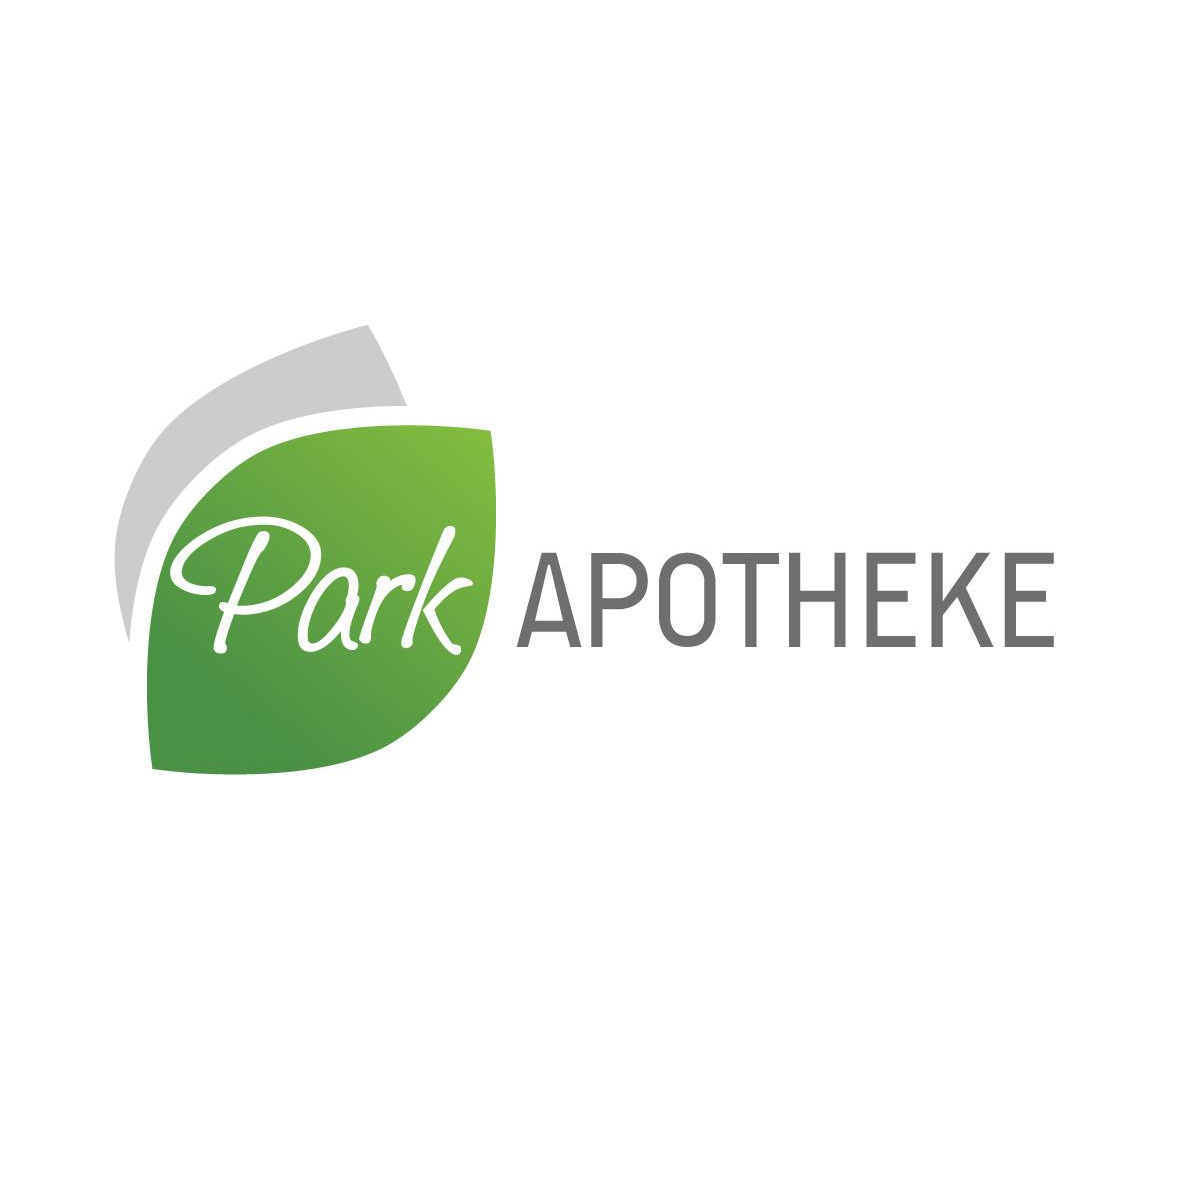 Park Apotheke in München